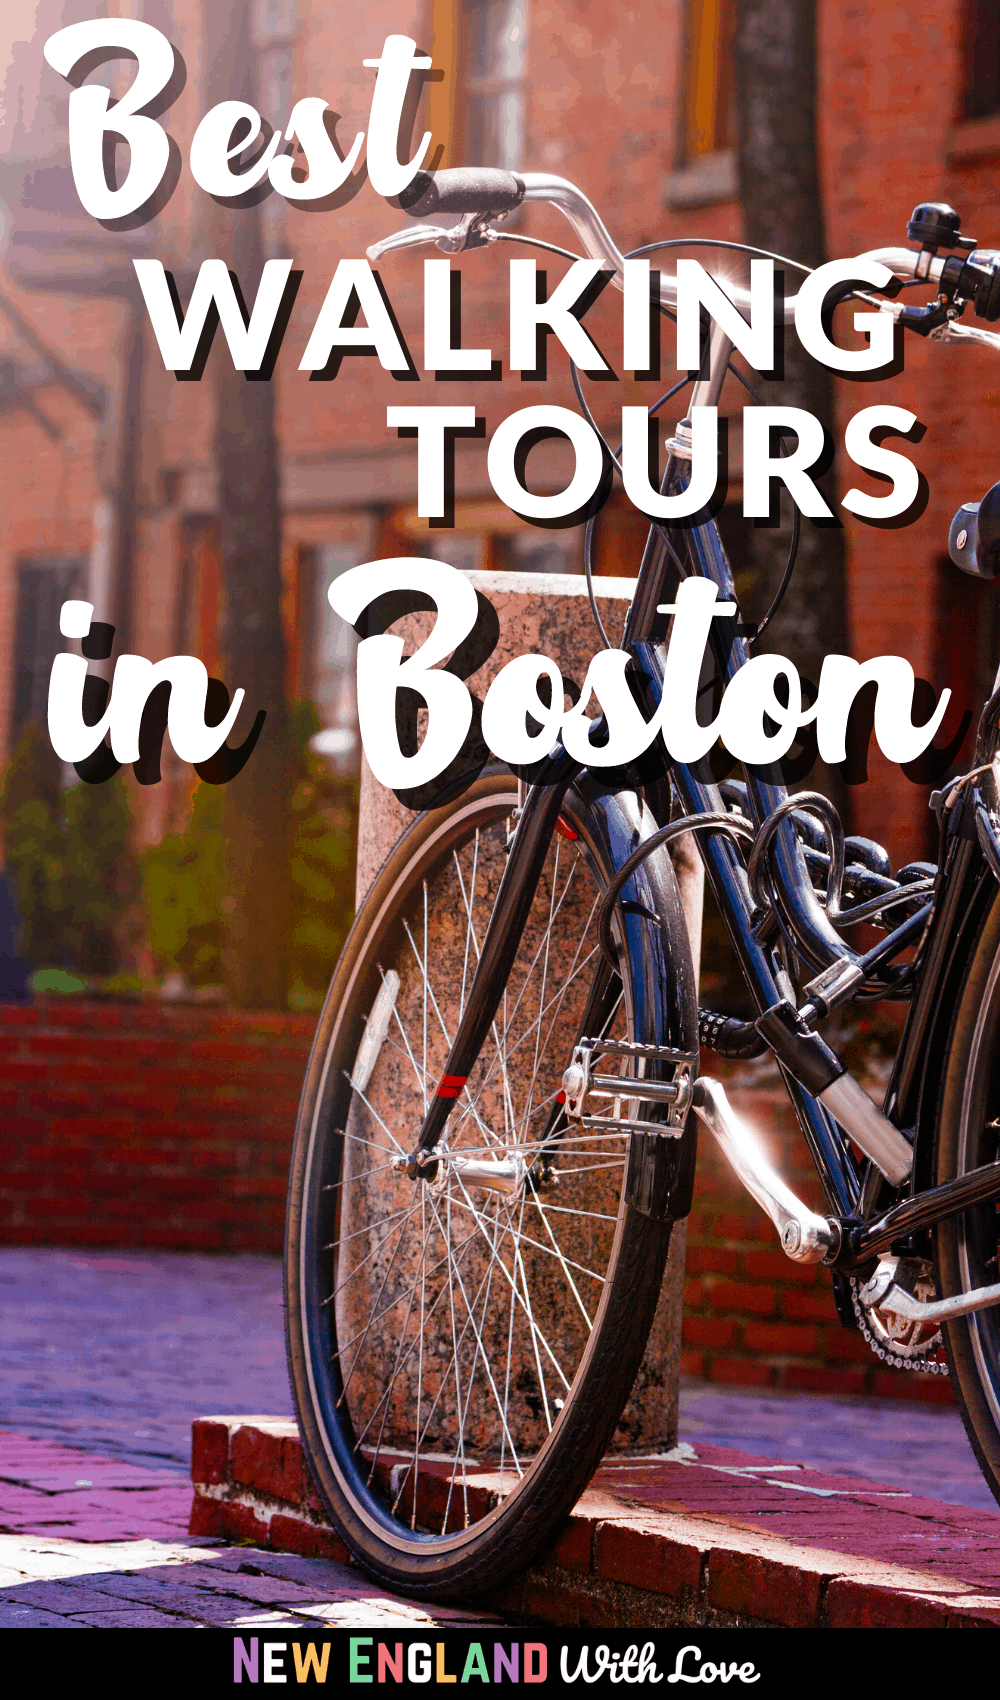 Pinterest graphic reading "Best Walking Tours in Boston"